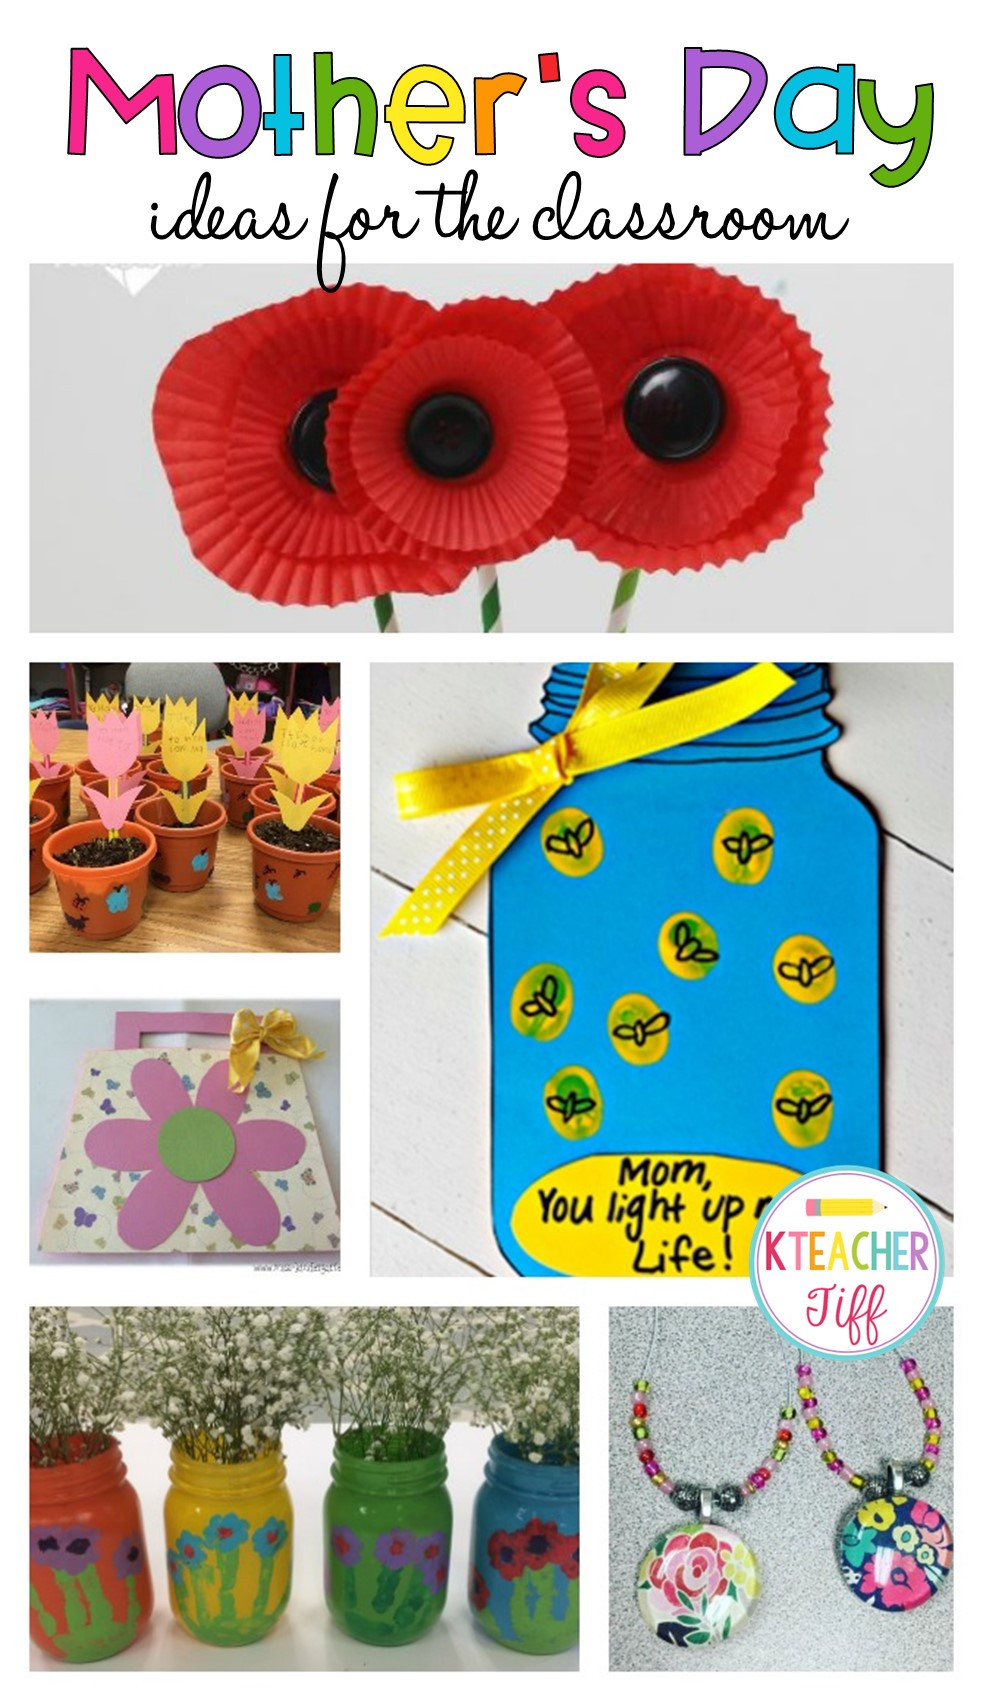 Mother's Day 2017 Gift Ideas
 Mother s Day Gift Ideas for the Classroom KTeacherTiff